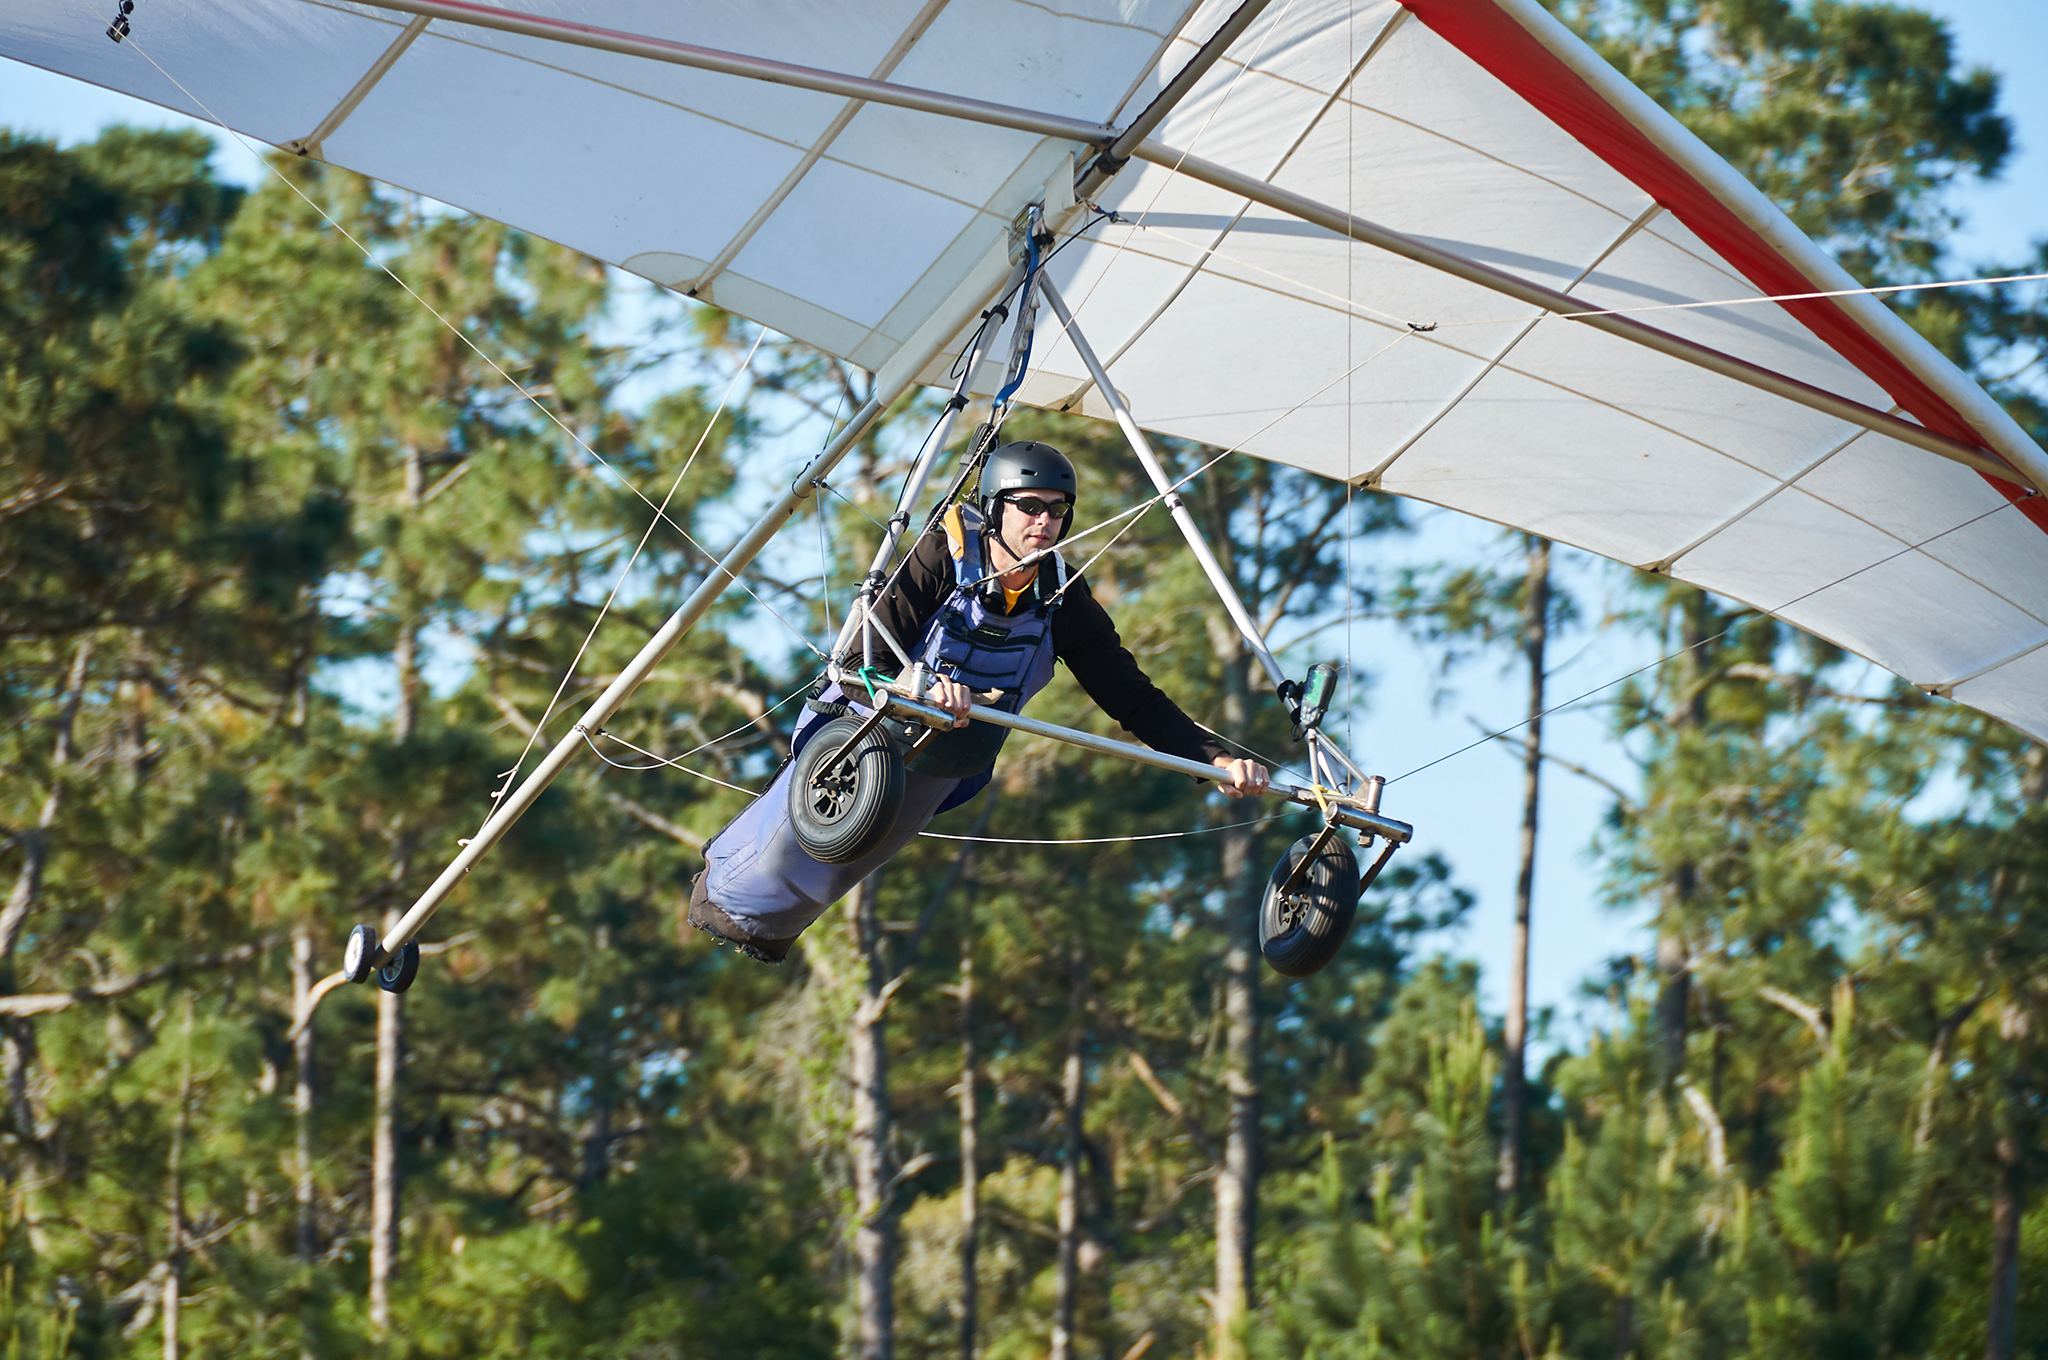 Jason in a hang glider ~ Джейсон на дельтаплане